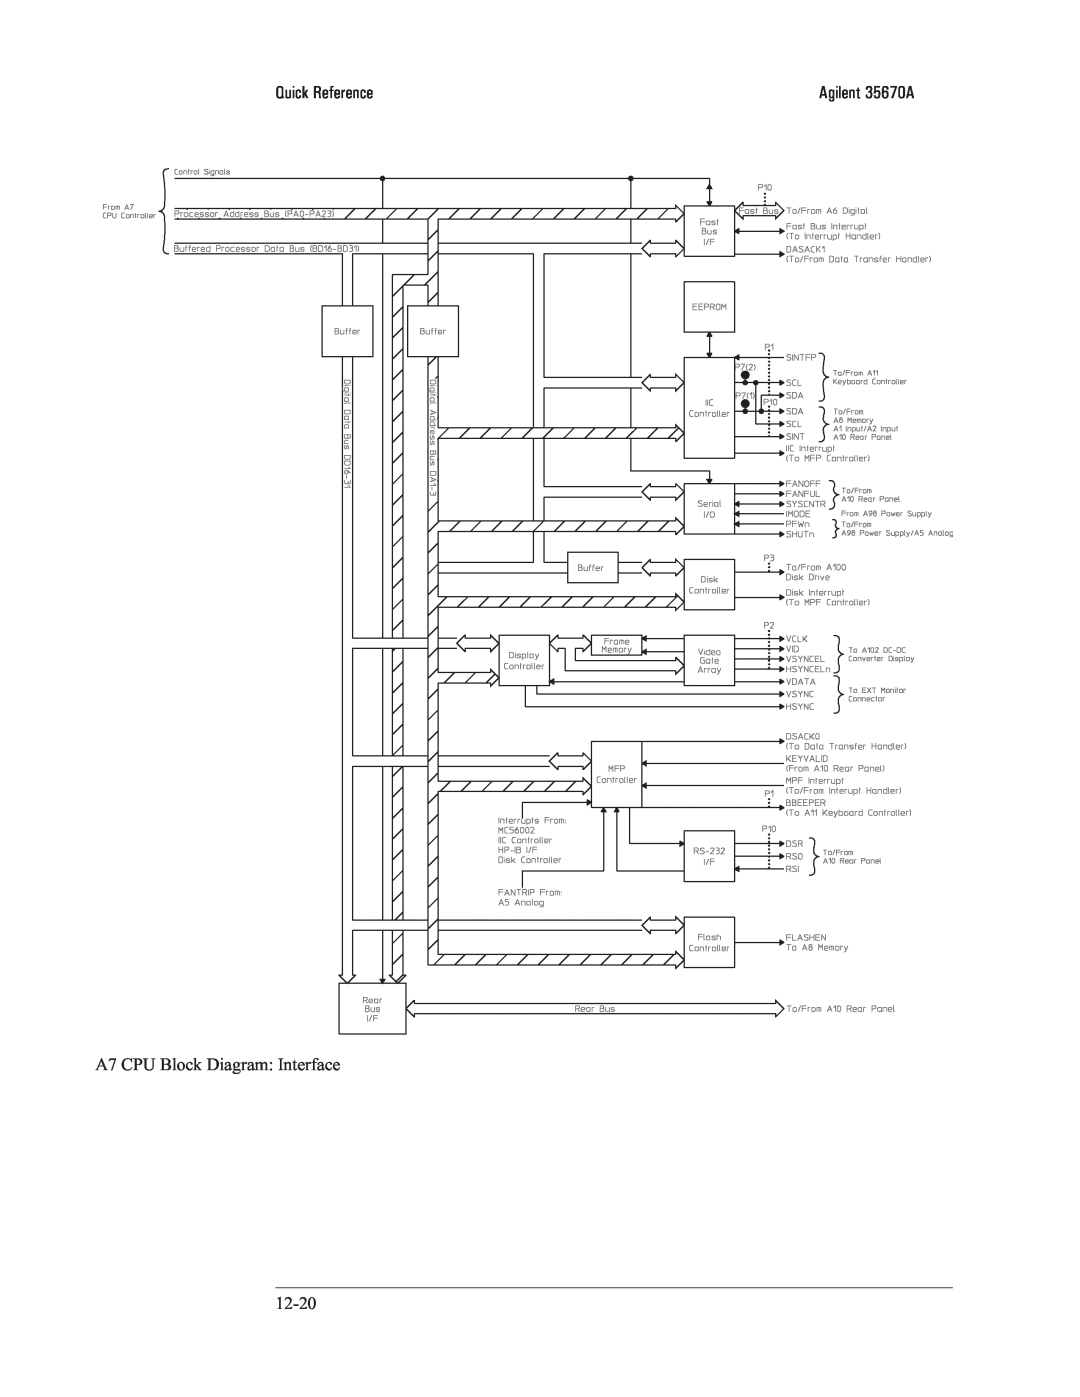 Agilent Technologies 35670-90066 manual Quick Reference, A7 CPU Block Diagram: Interface, Agilent 35670A 